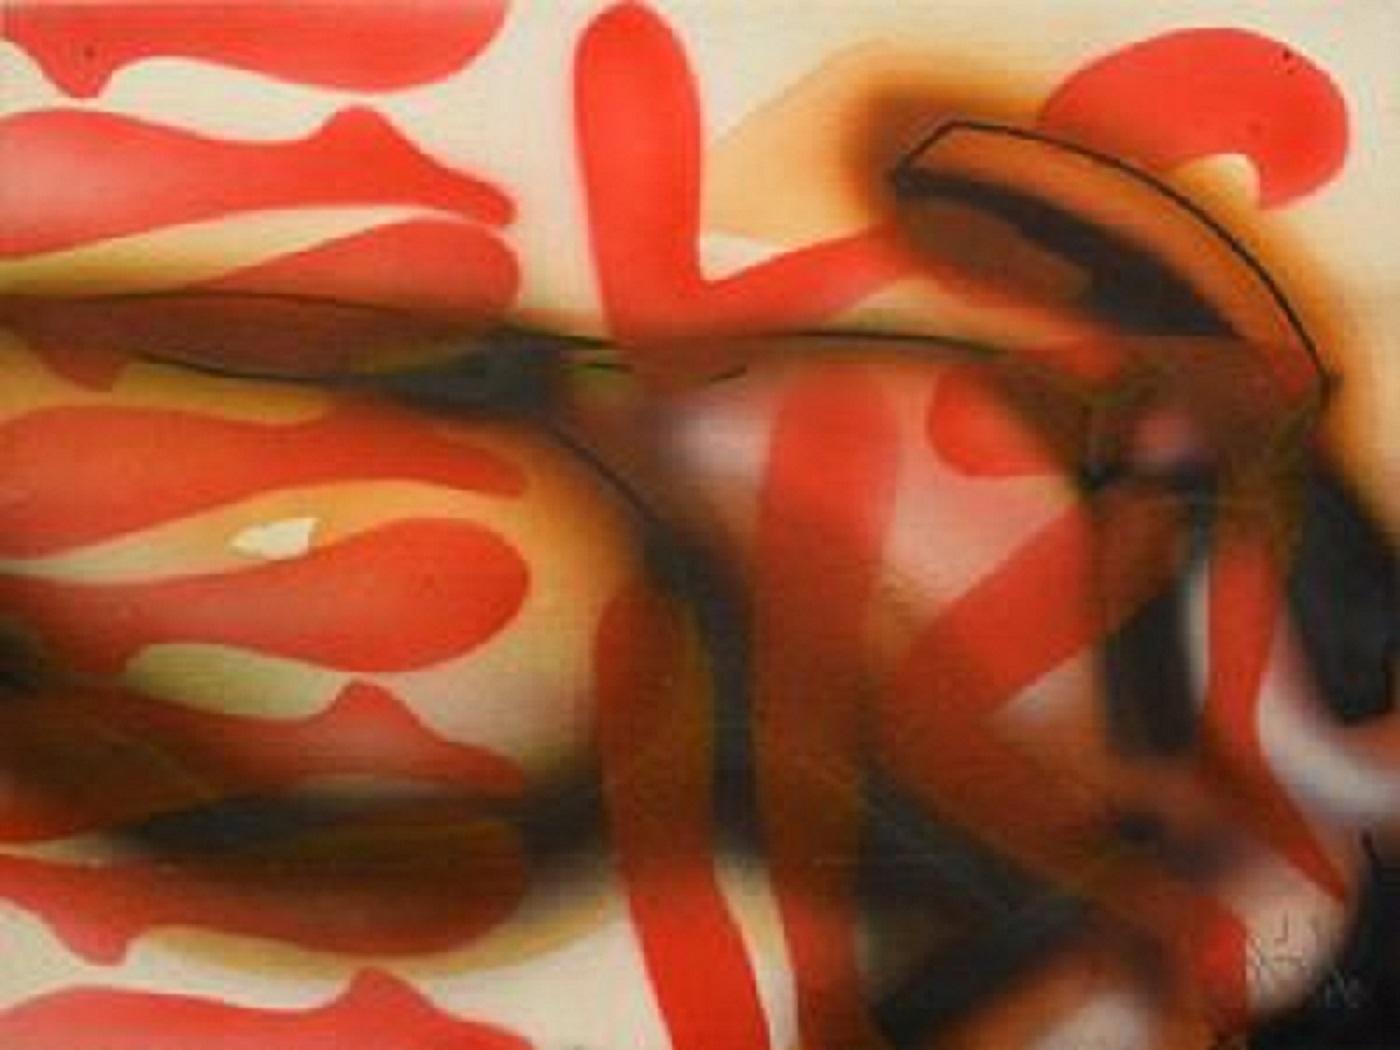 Luis Miguel Valdes, ¨Patas¨, 2000, Work on paper, 11.8x15.7 in - Art by Luis Miguel Valdes 